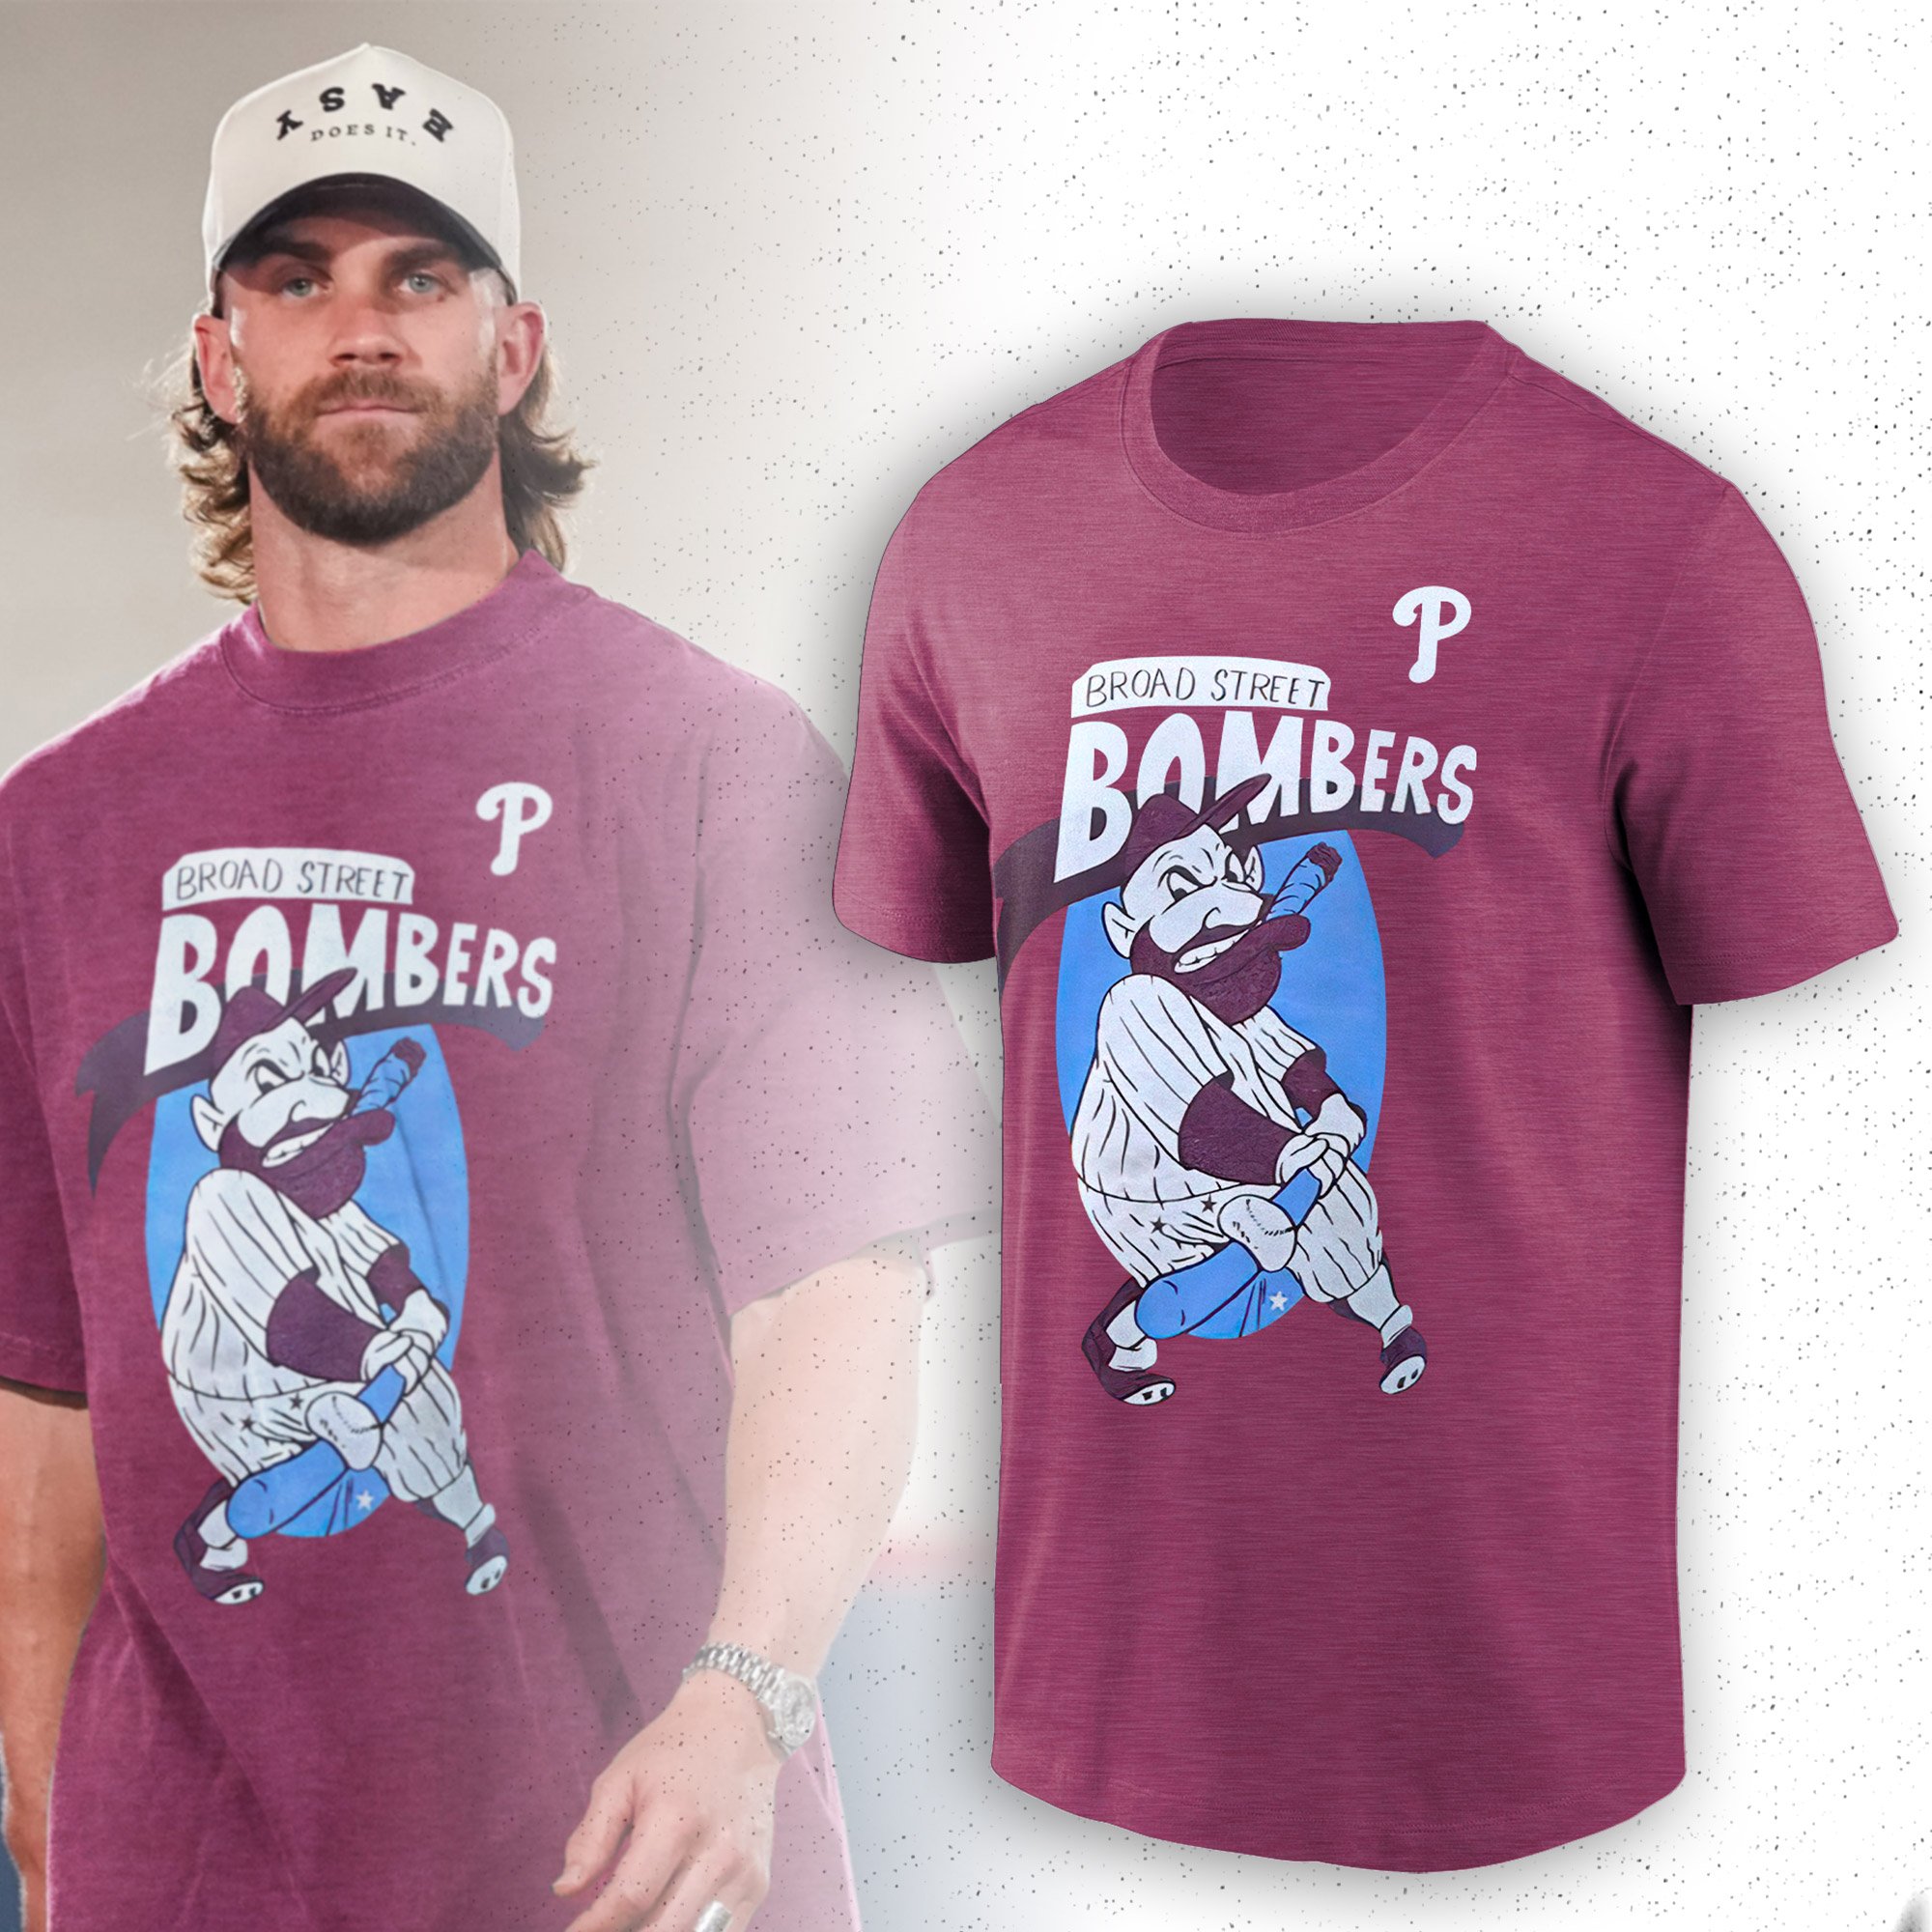 The Broad Street Bombers Shirt - Phillies Playoff Baseball Unisex